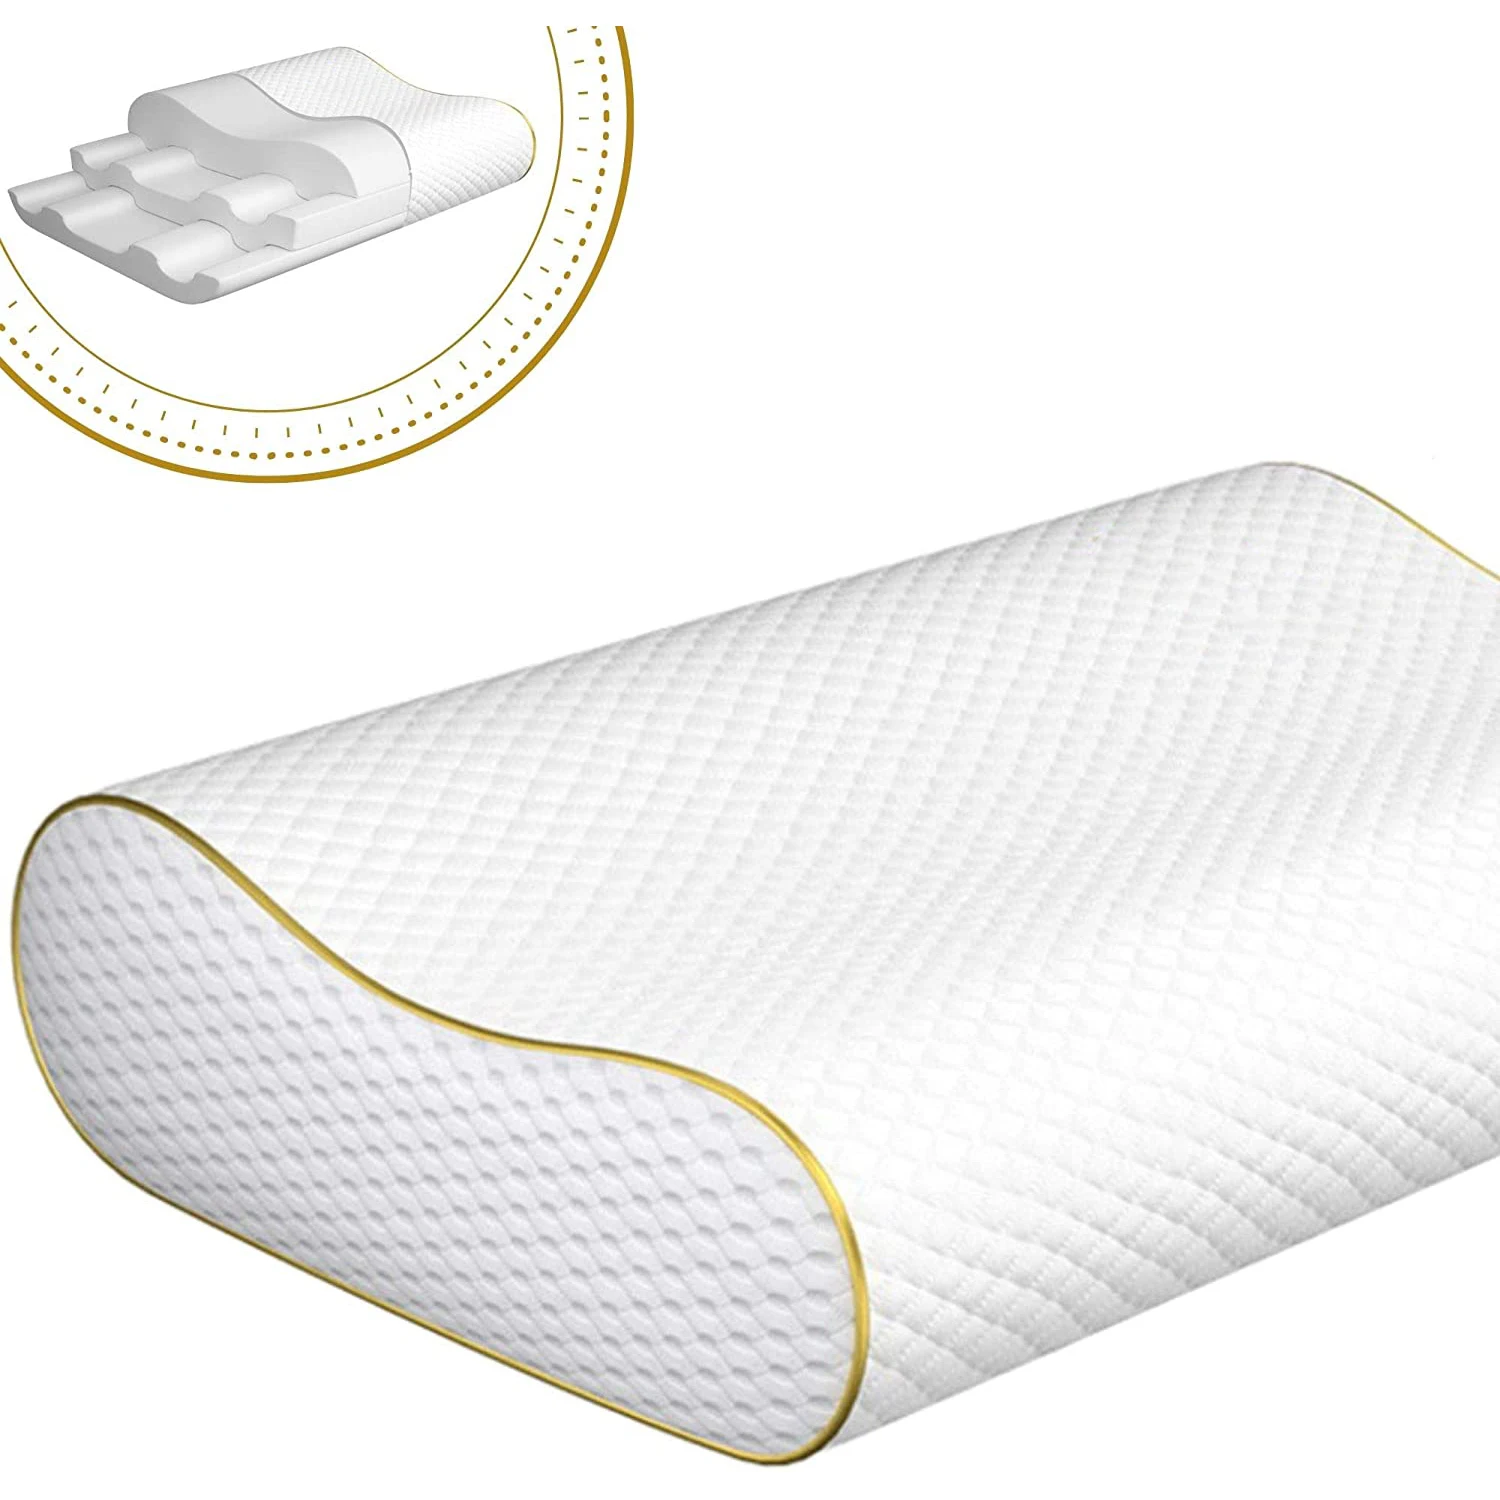 Memory foam pillows orthopedic for sleeping, orthopedic cervical pillow memory foam, contour memory foam pillow